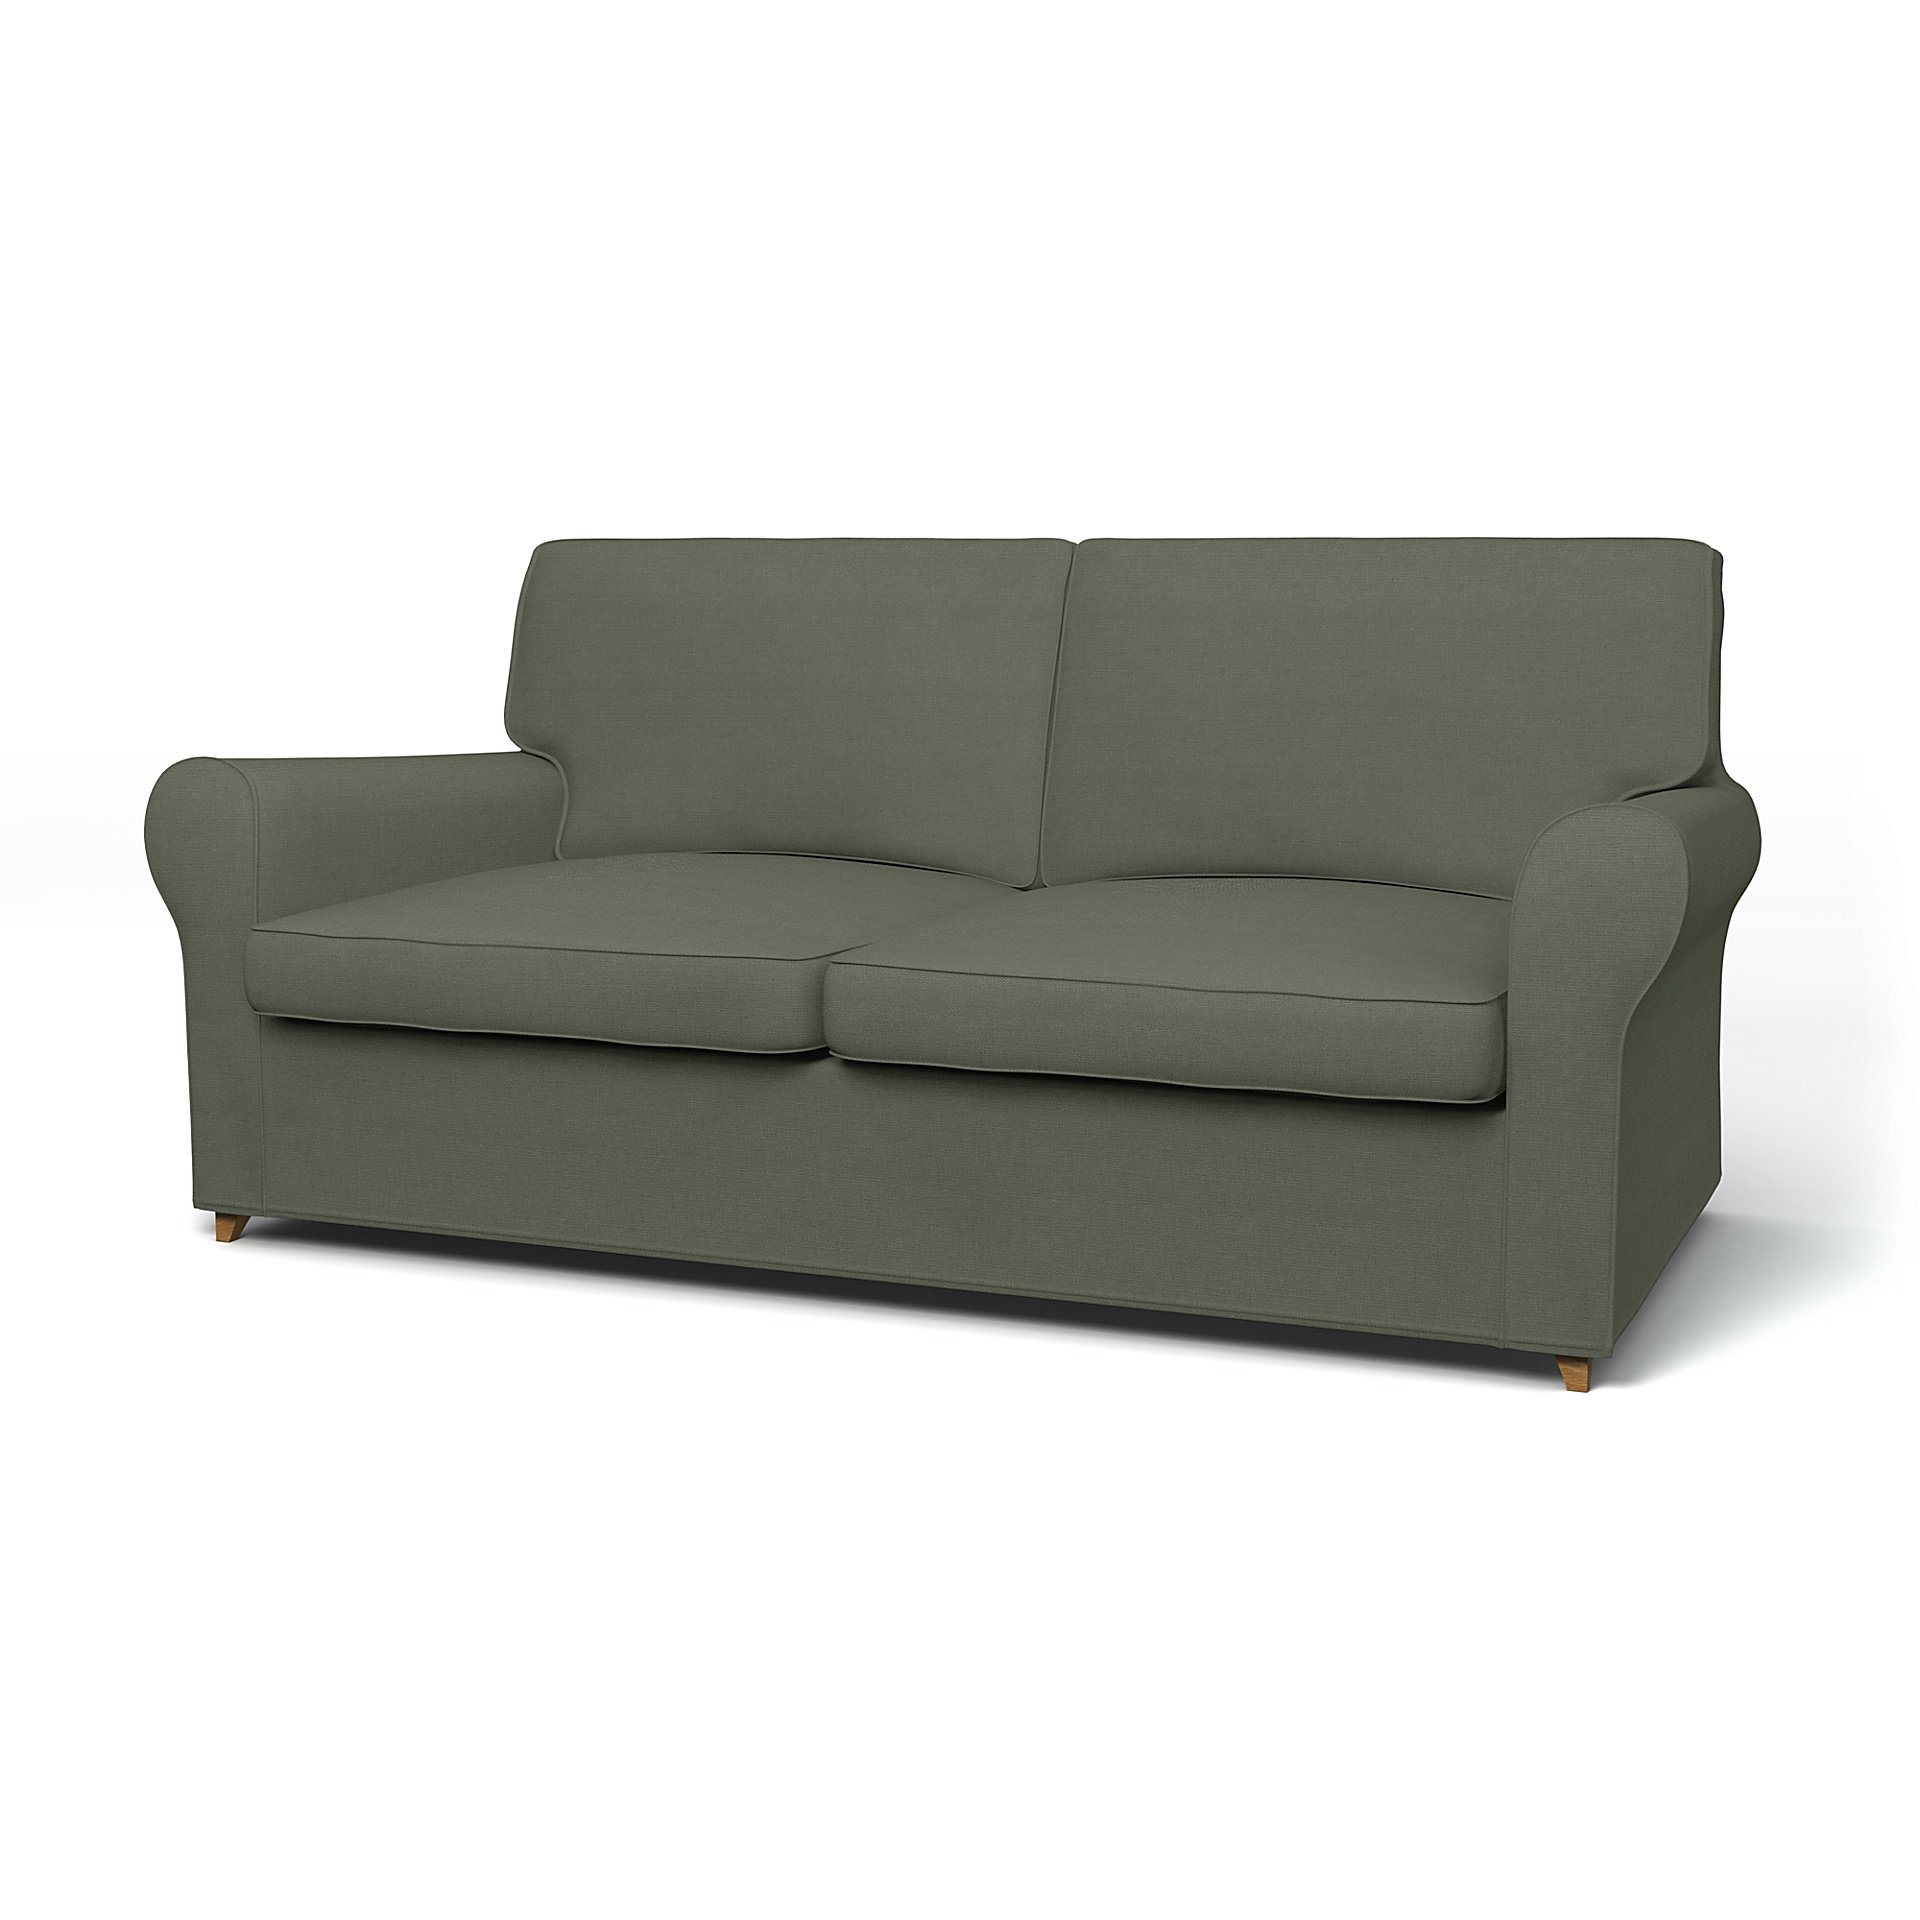 IKEA - Angby Sofa Bed Cover, Rosemary, Linen - Bemz